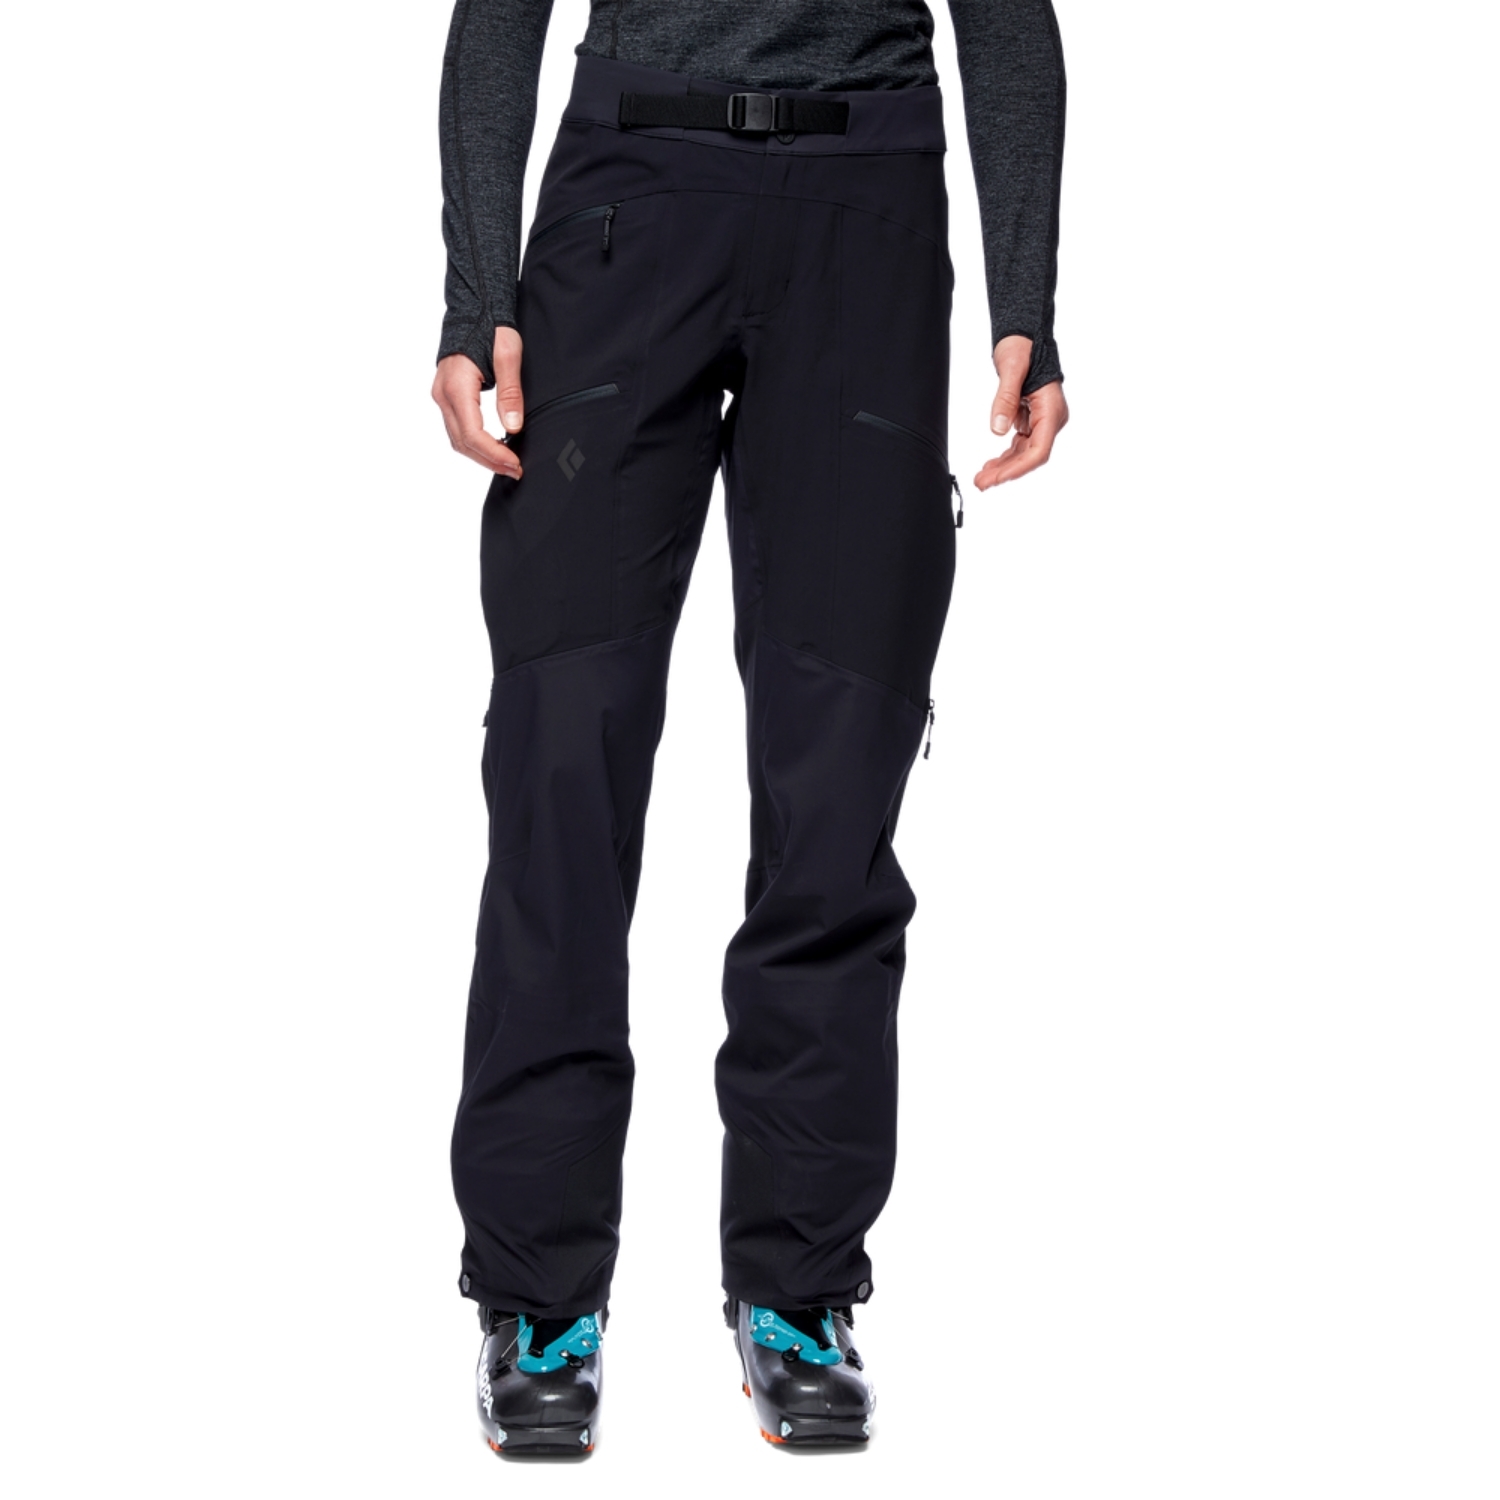 Zdjęcia - Odzież narciarska Black Diamond Damskie spodnie  DAWN PATROL HYBRID PANTS black - S 